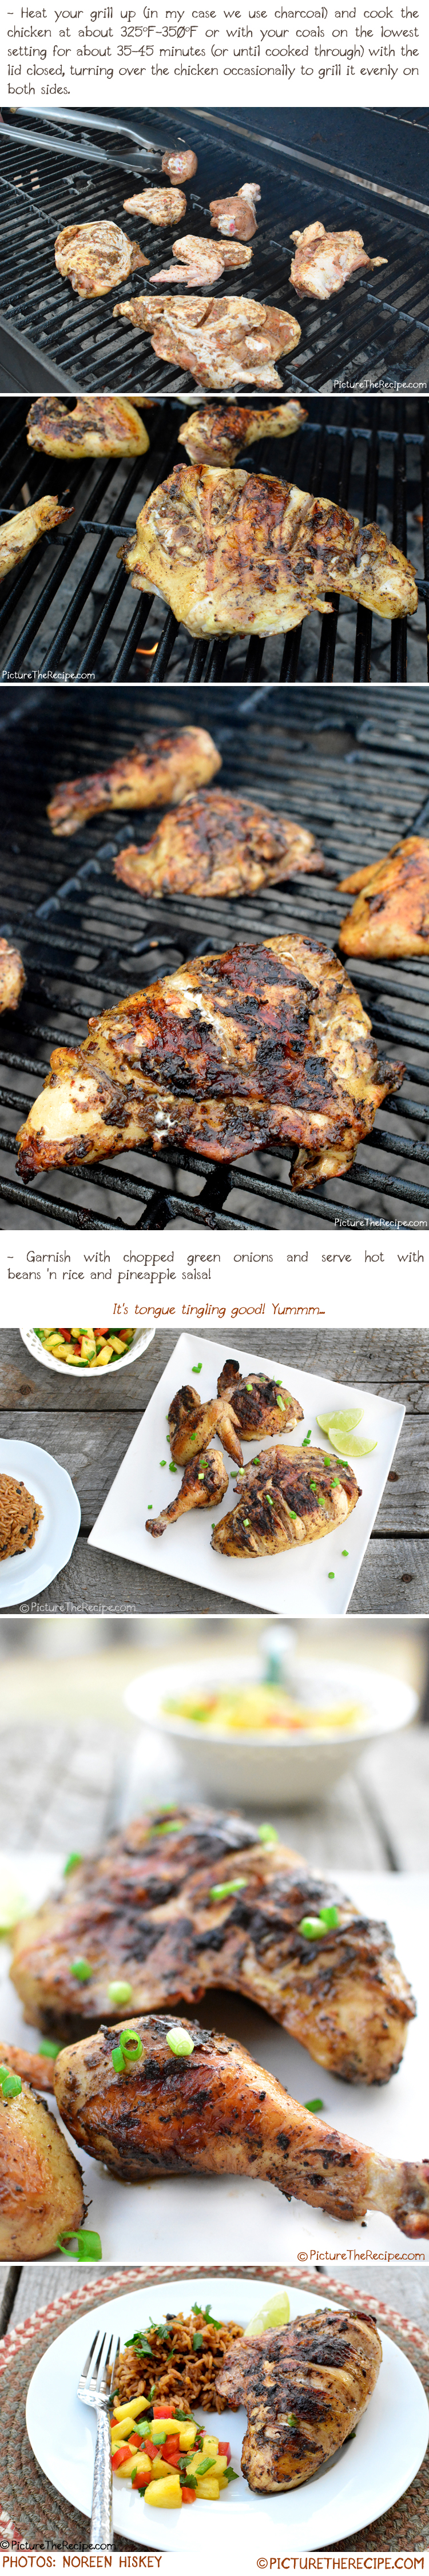 Jamaican Jerk Chicken Recipe by PictureTheRecipe com (Part-2)